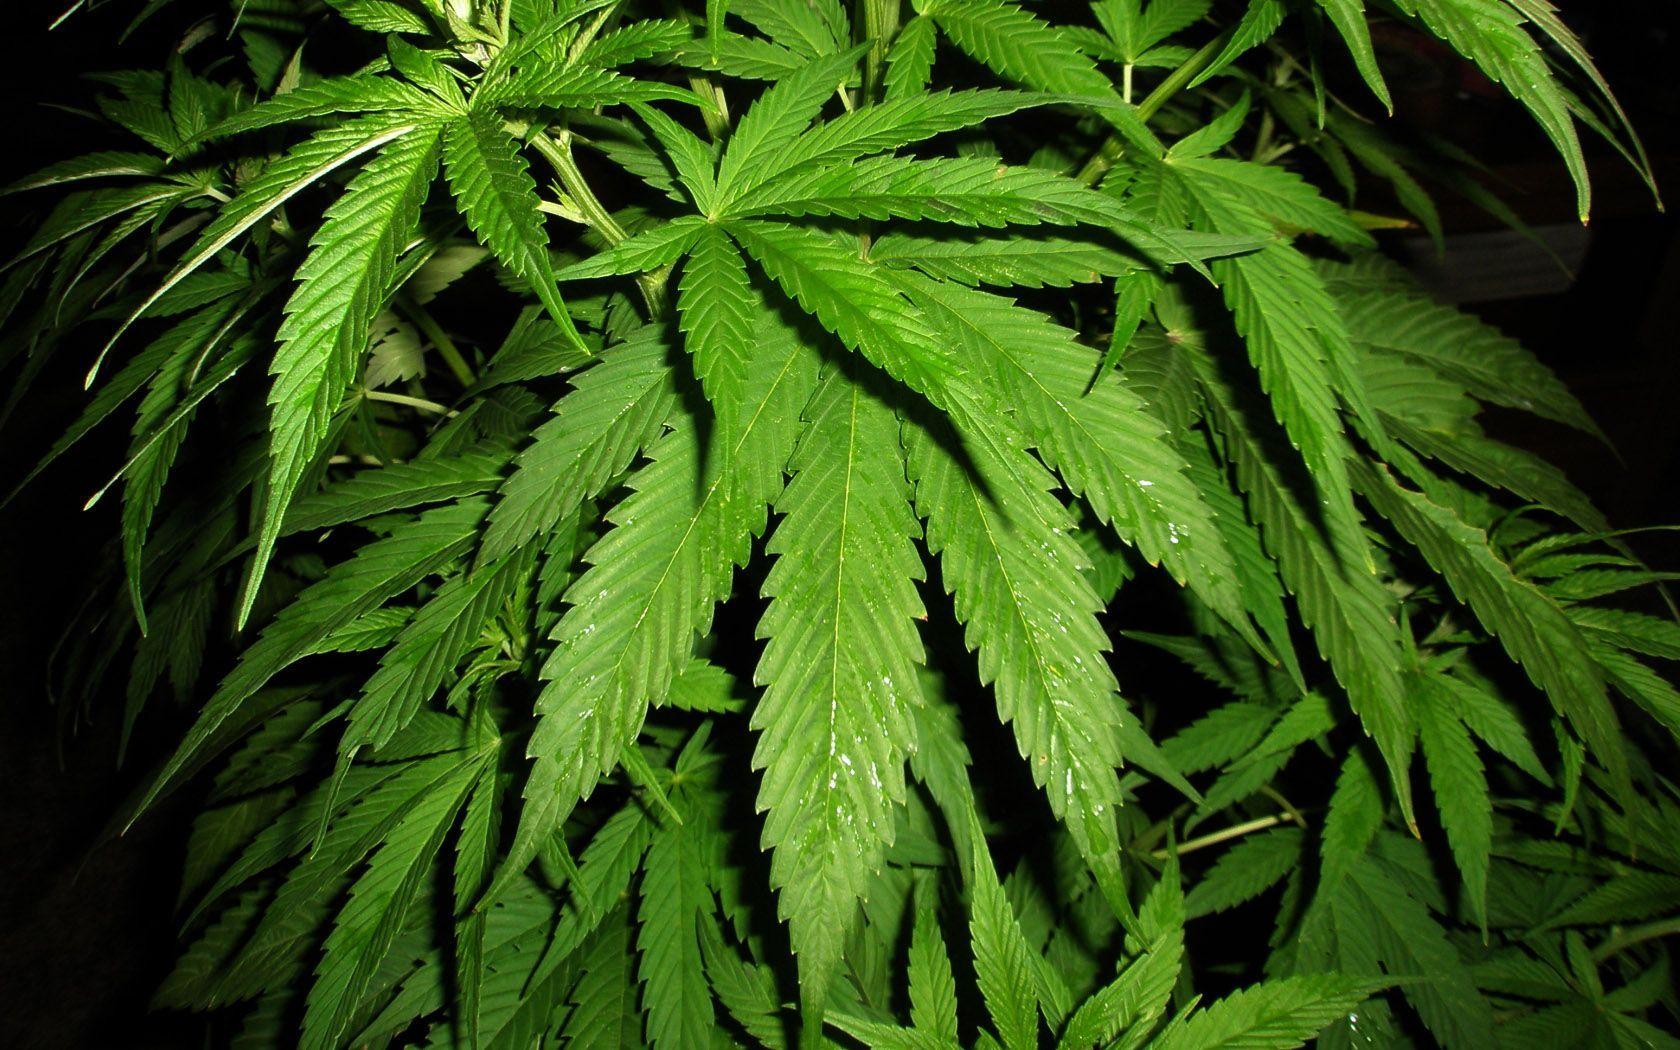 Hemp cannabis Marijuana wallpaper and image. Windows